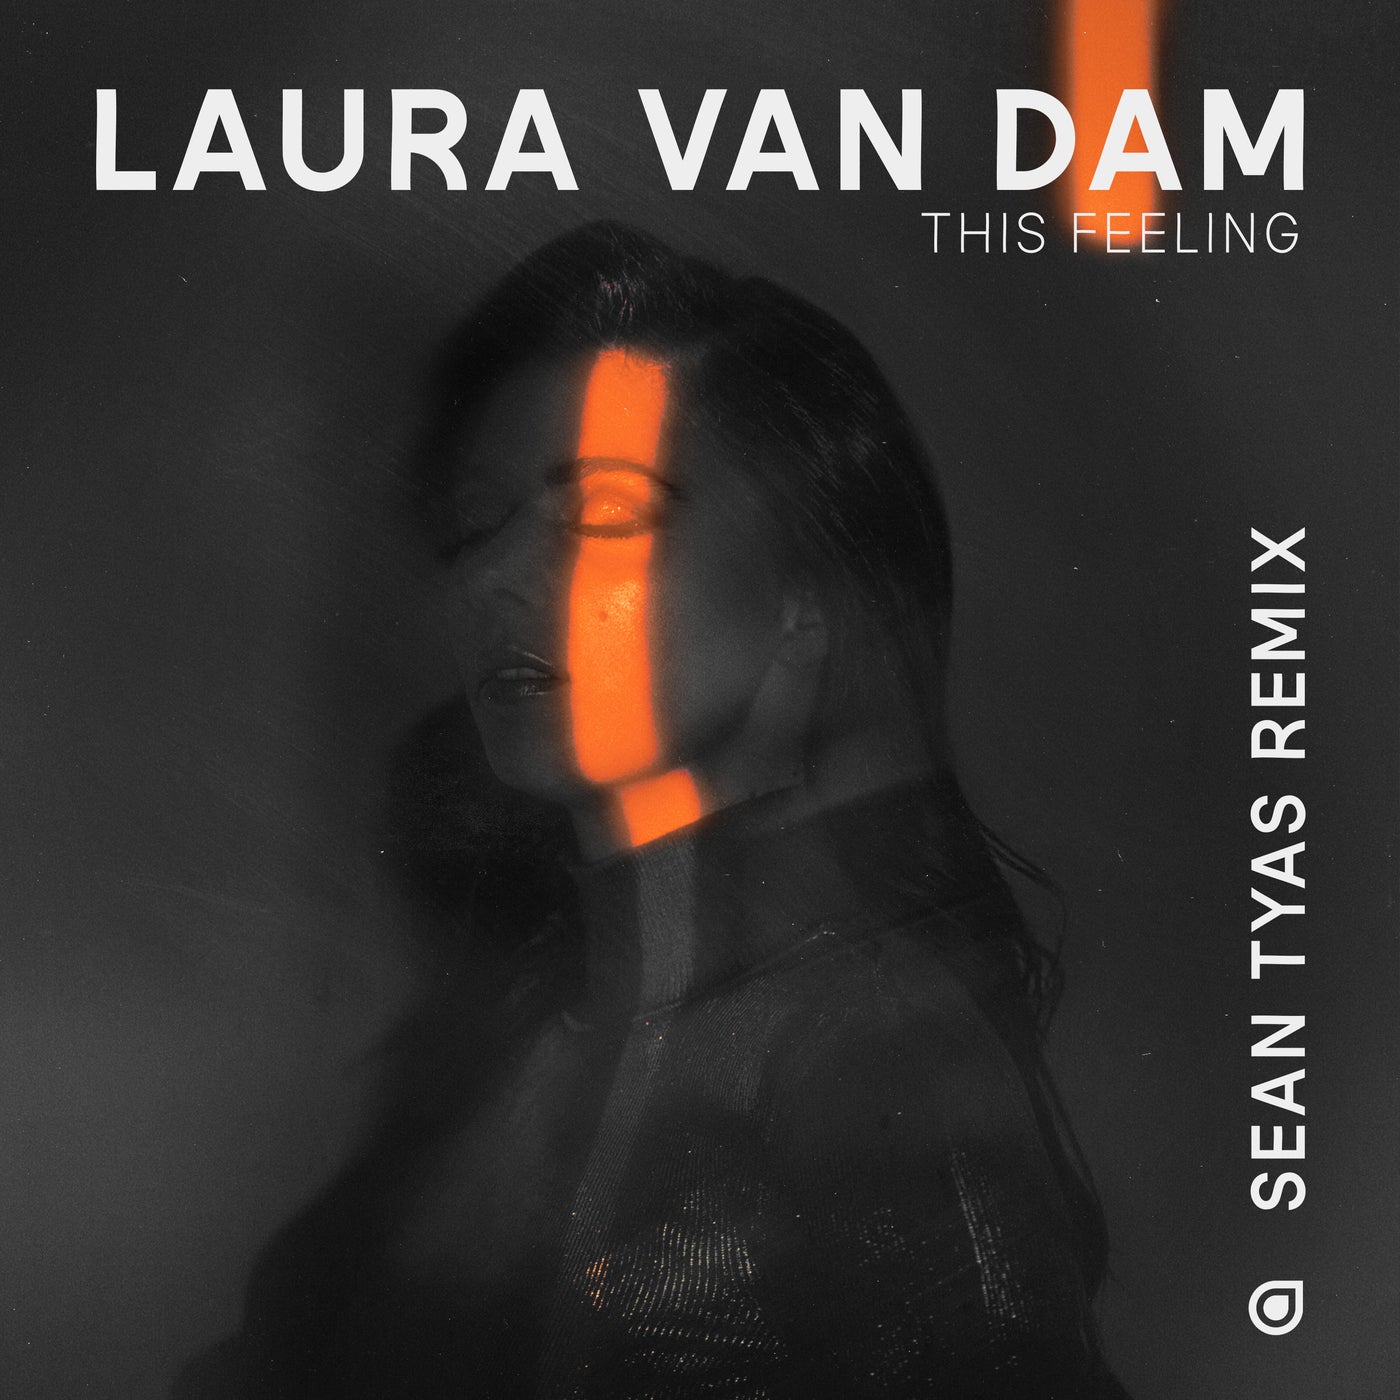 Laura van Dam - This Feeling (Sean Tyas Extended Remix)